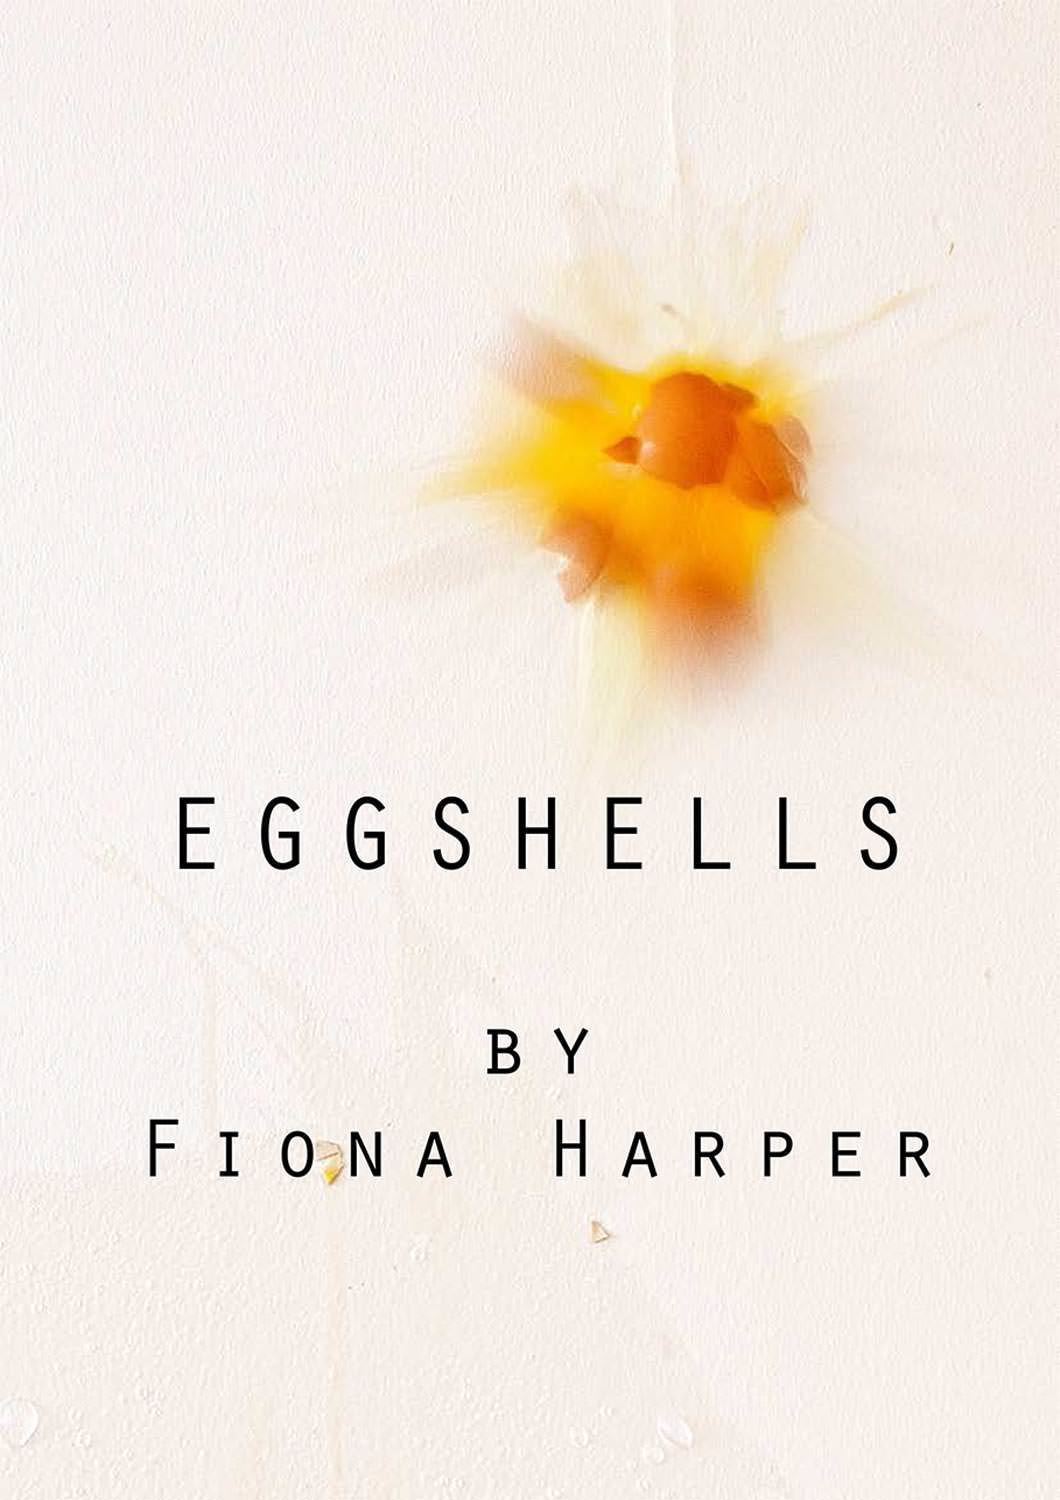 Eggshells-Poster-copy-s.jpg